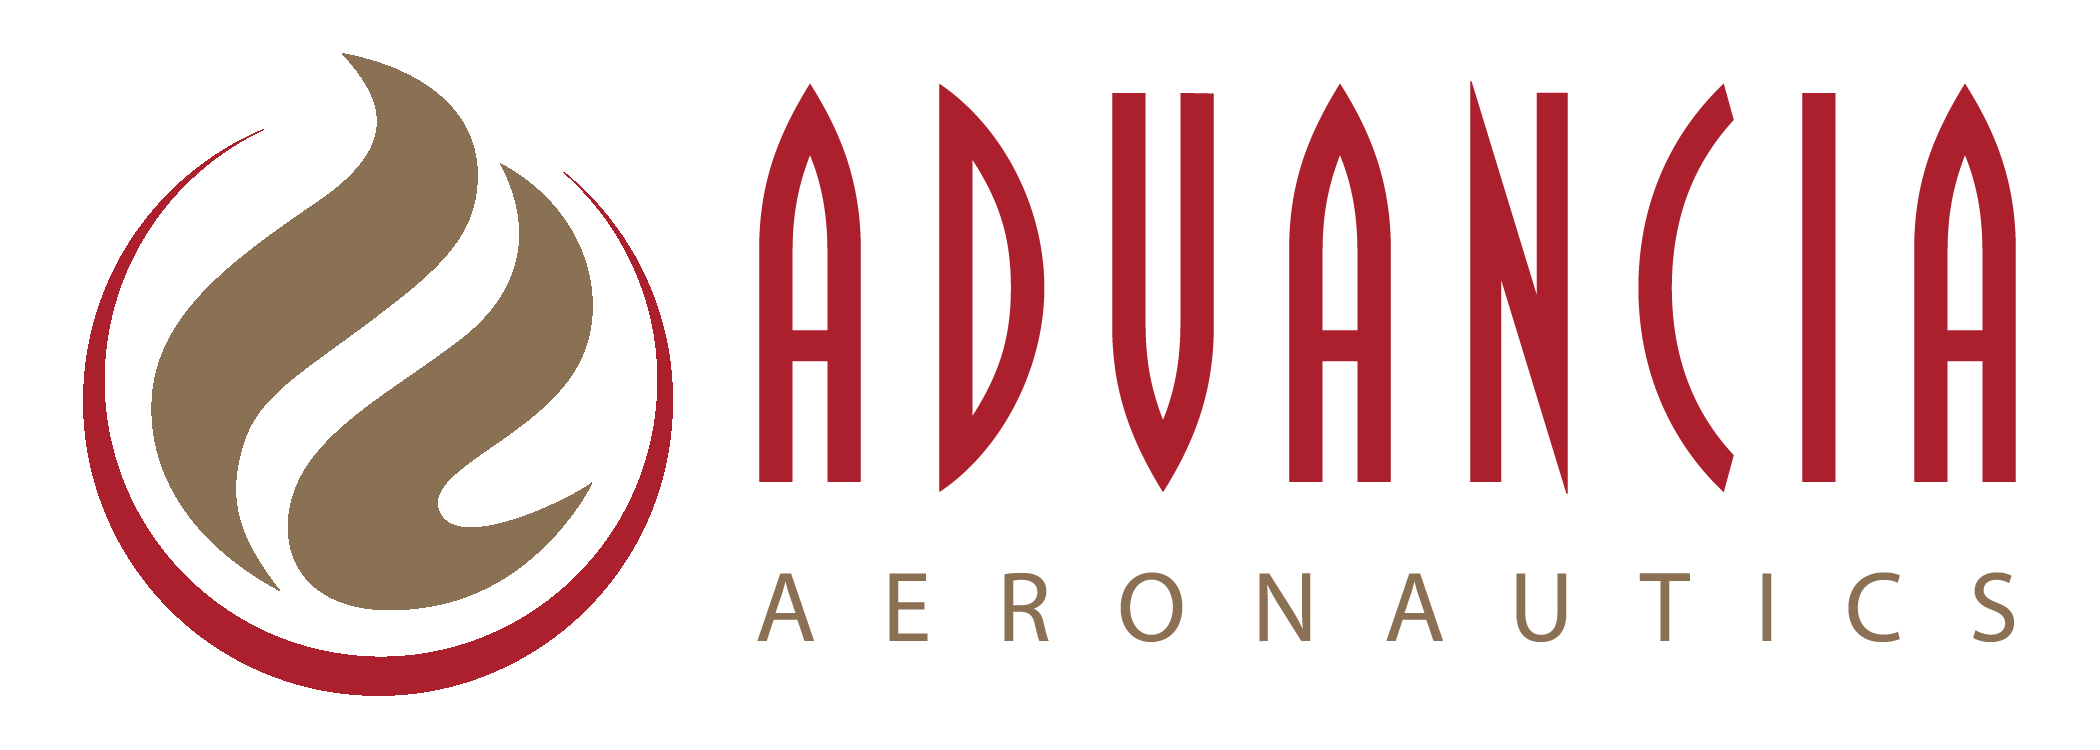 Advancia Aeronautics